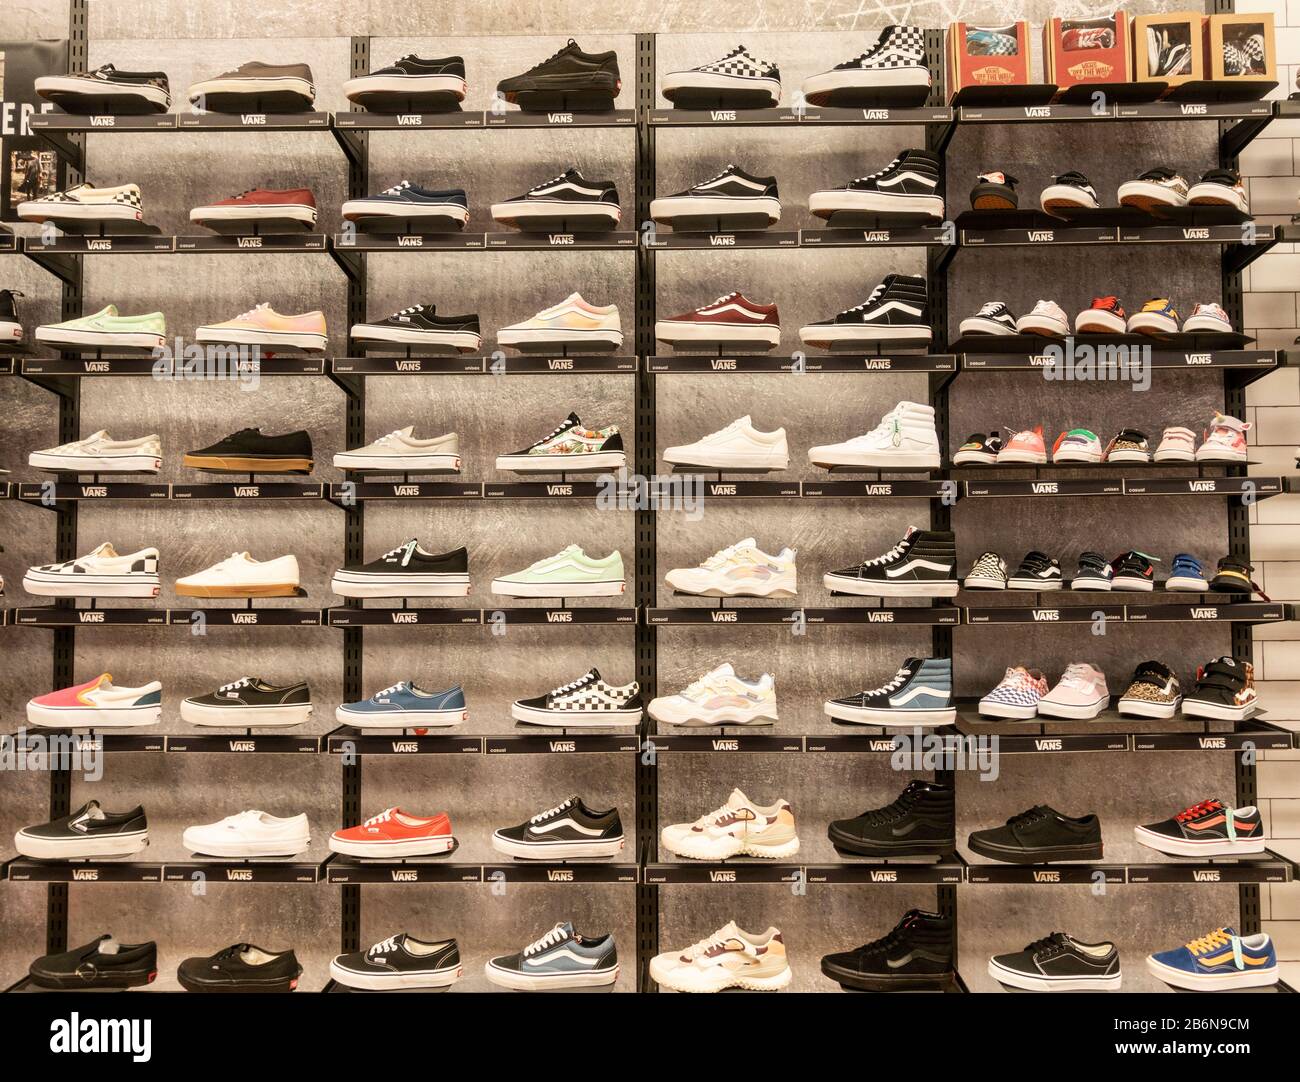 Vans footwear display in department store Stock Photo - Alamy